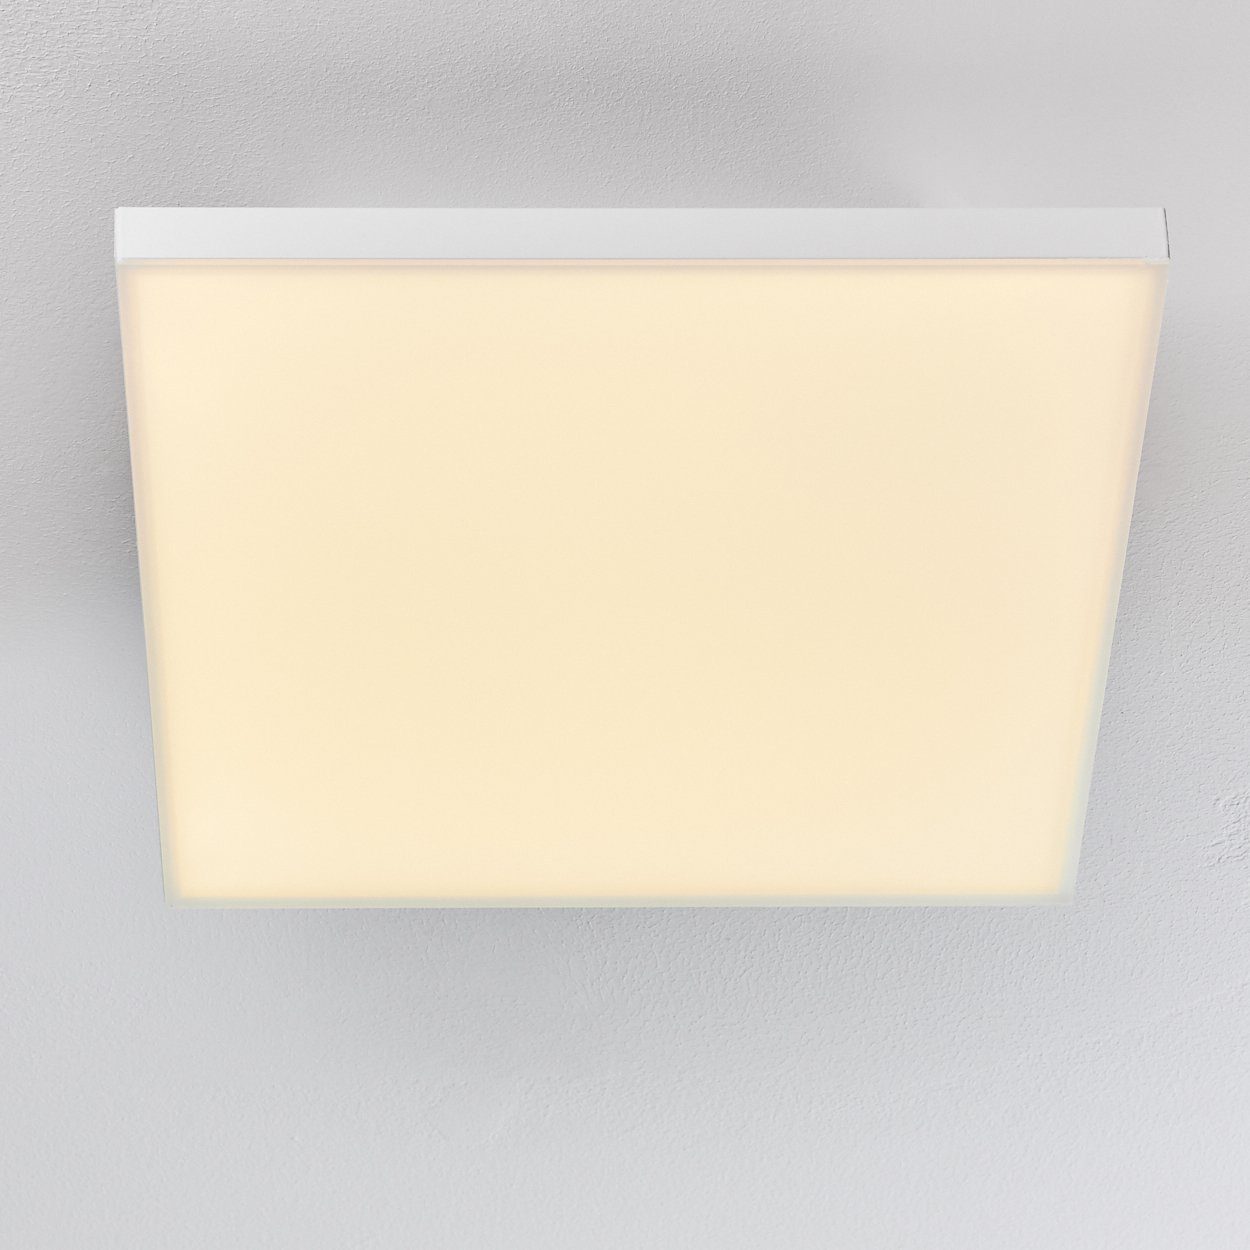 Lumen, Panel Weiß, in 3000 2100 Kelvin, Aluminiumin Design aus hofstein »Soanne« Panel LED modern flachem Deckenpanel eckiges Watt, 18